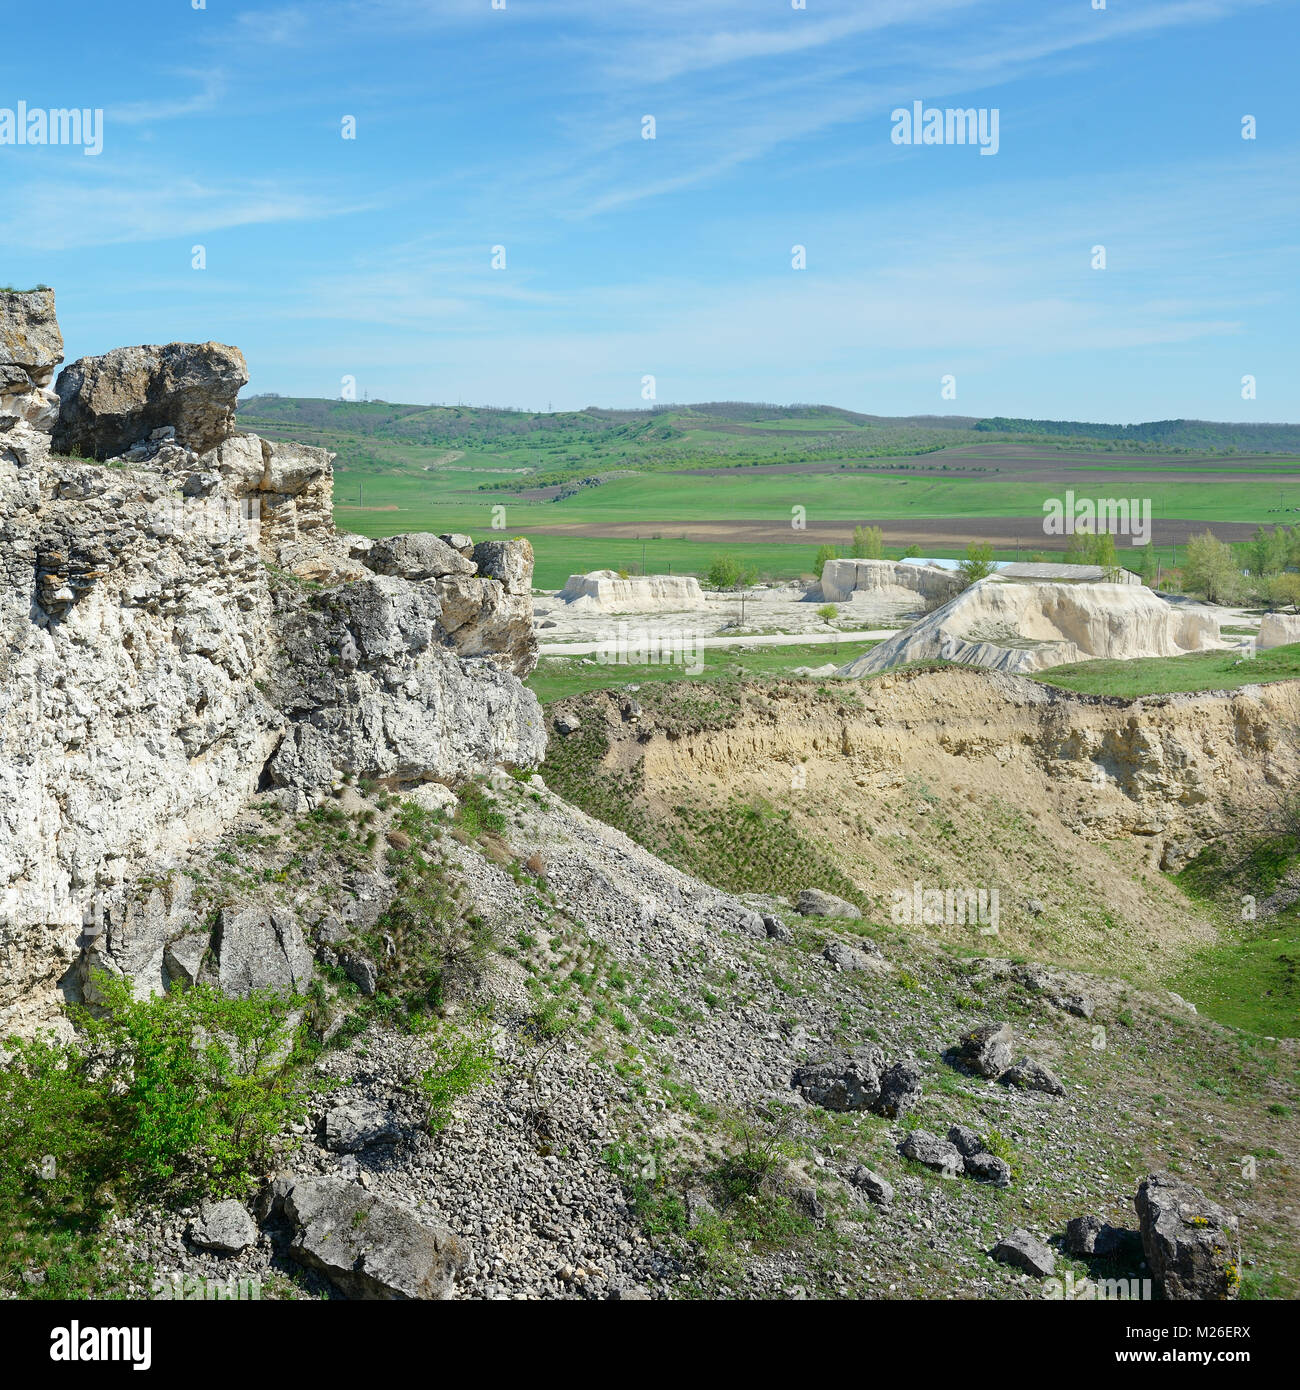 Abandoned quarry for limestone mining. Destruction of environment. Stock Photo